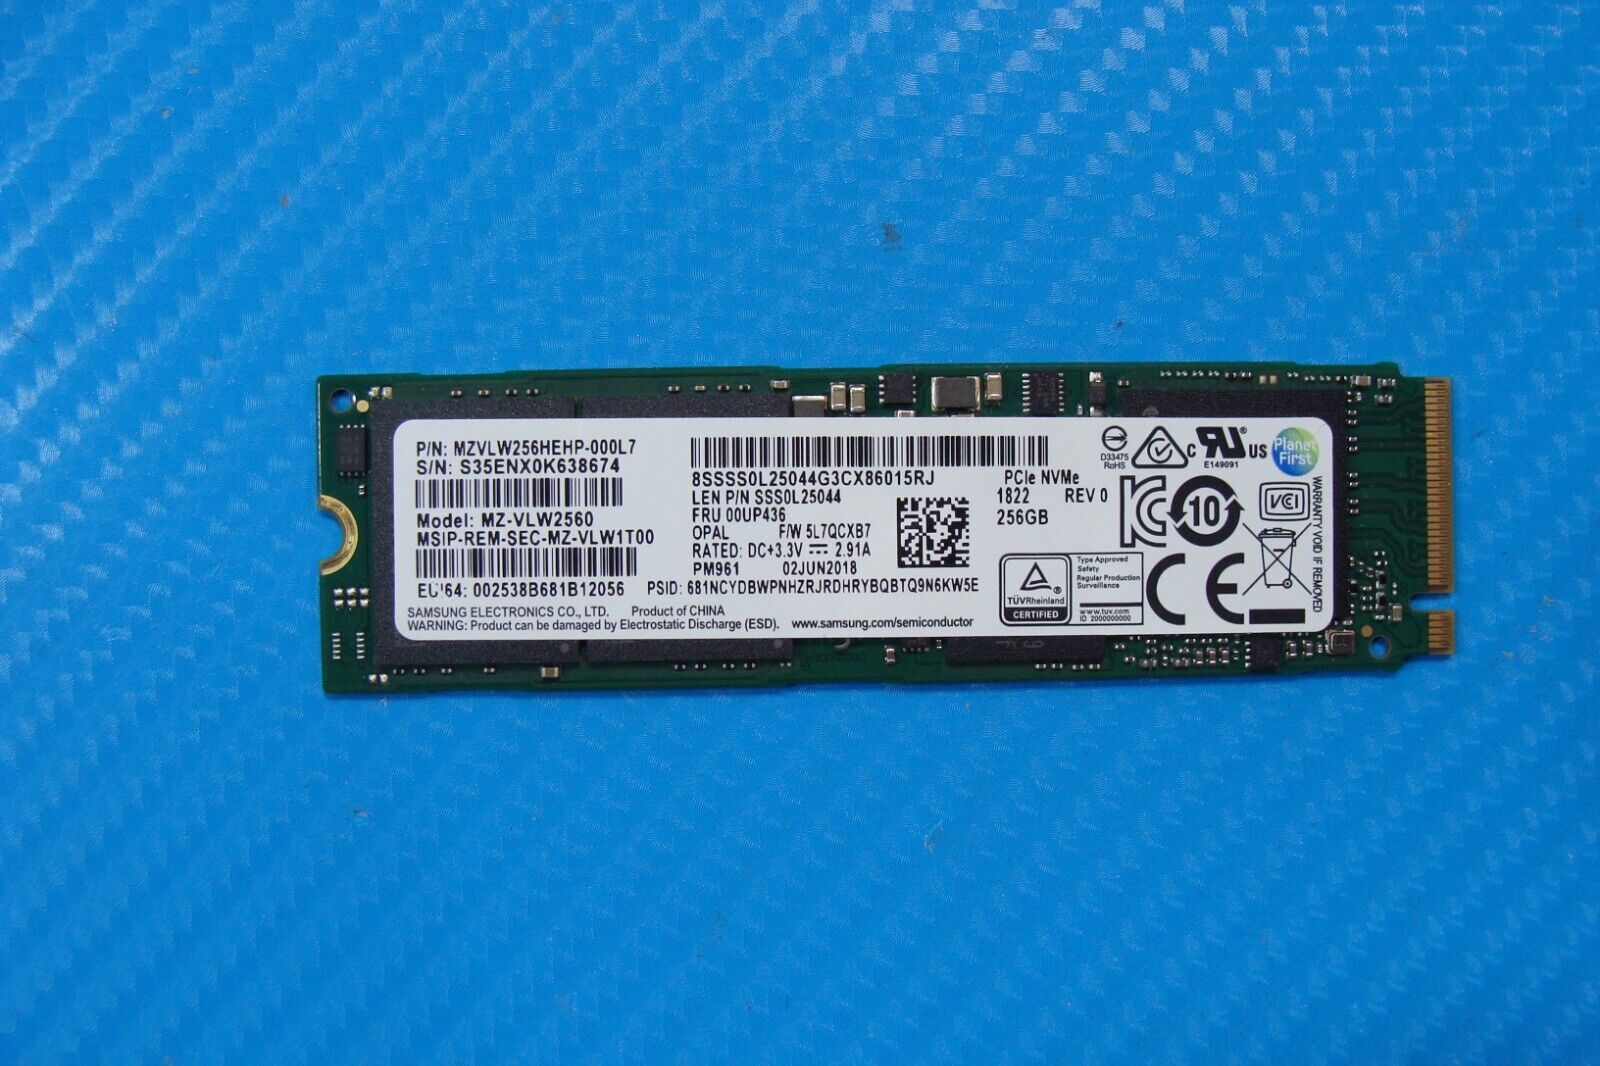 Lenovo T480s Samsung 256GB NVMe M.2 SSD Solid State Drive MZVLW256HEHP-000L7